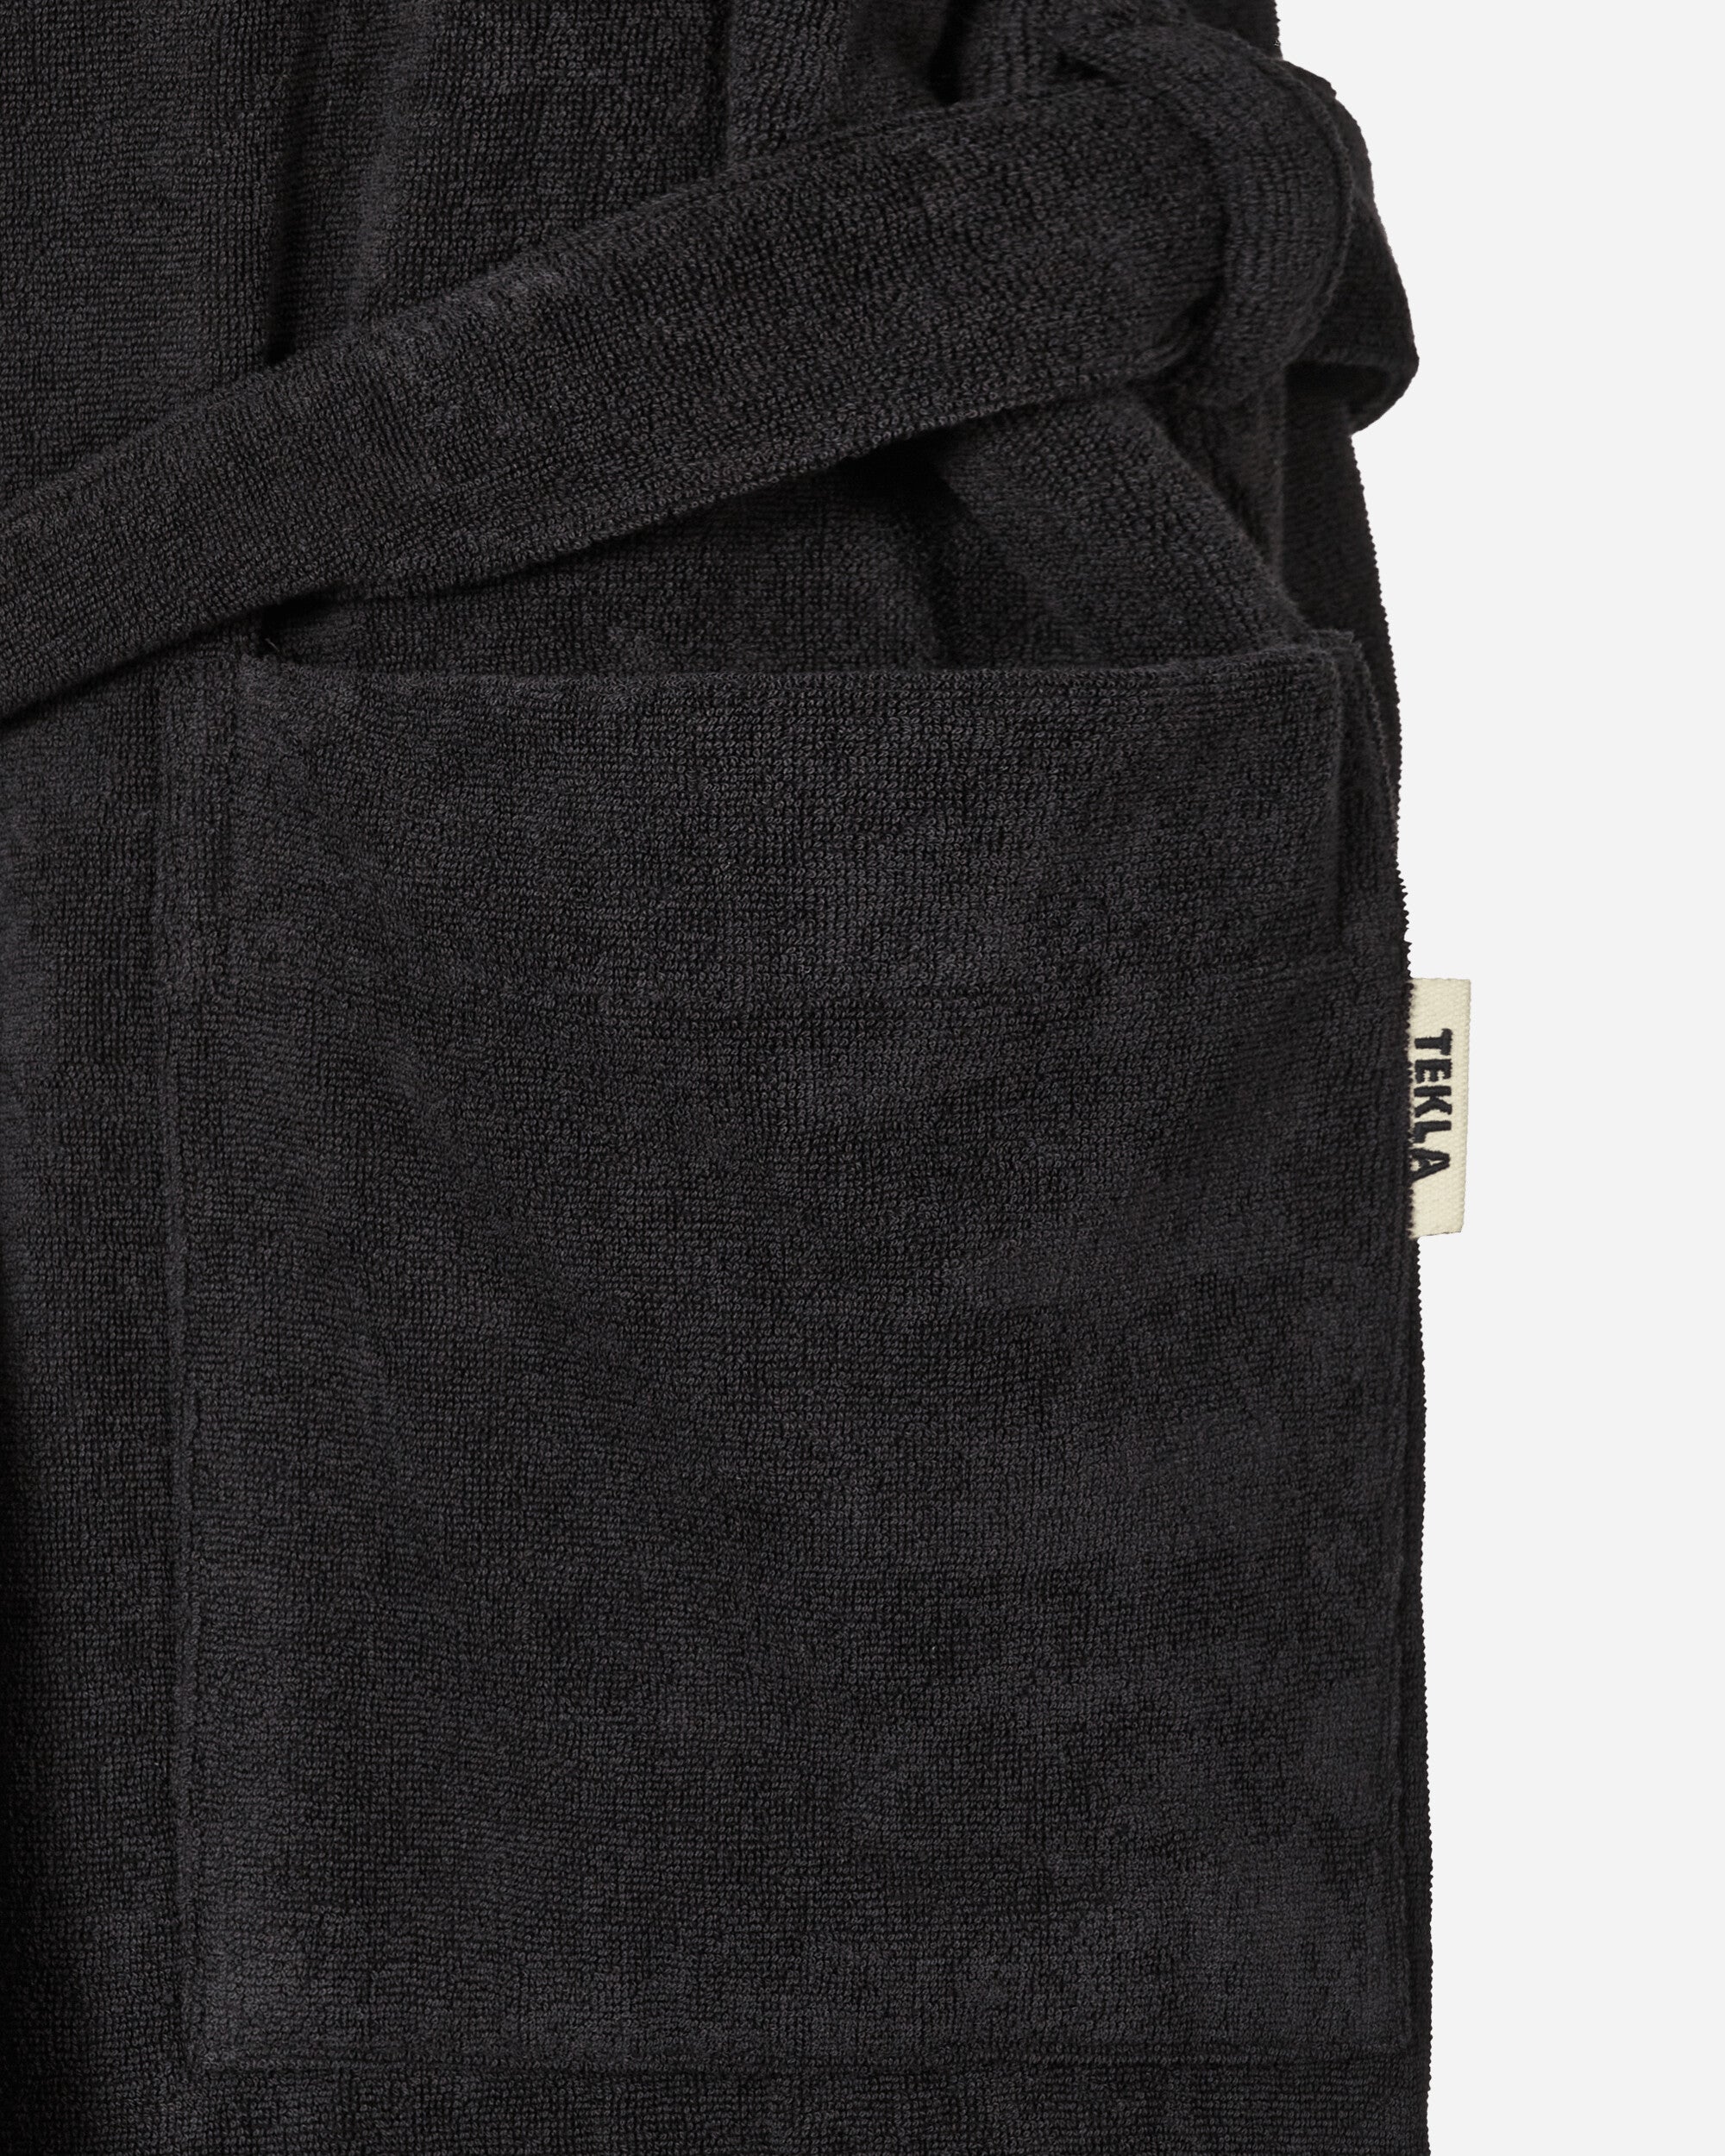 Tekla Hooded Bathrobe - Solid Black Textile Bathrobes BT-BL BLST